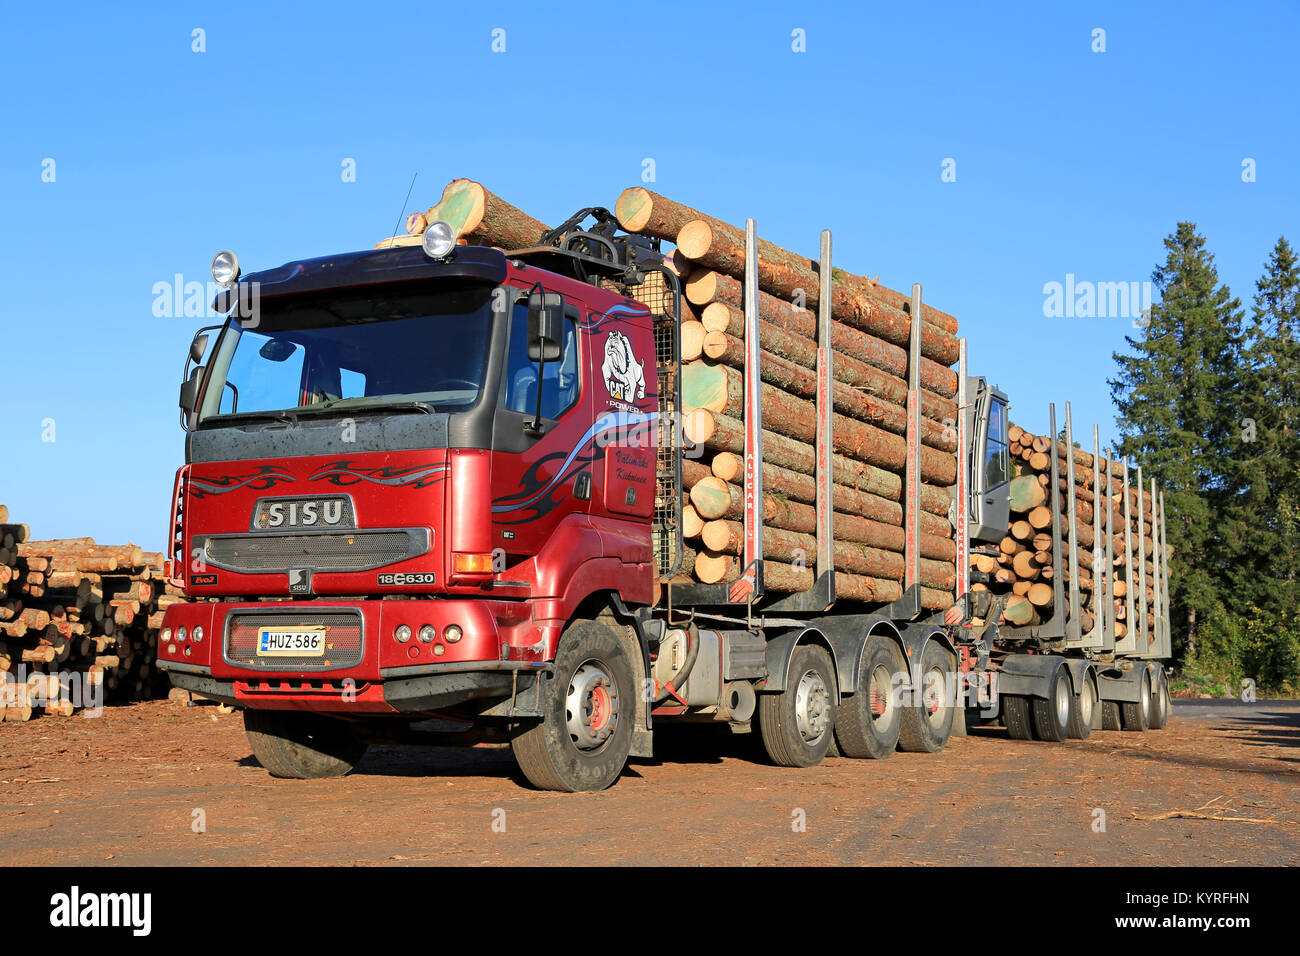 LUVIA, FINLAND - SEPTEMBER 19, 2014: Sisu 18E630 Timber truck at sawmill lumber yard ready to unload. The Finnish Sisu Truck has Caterpillar C18 Engin Stock Photo